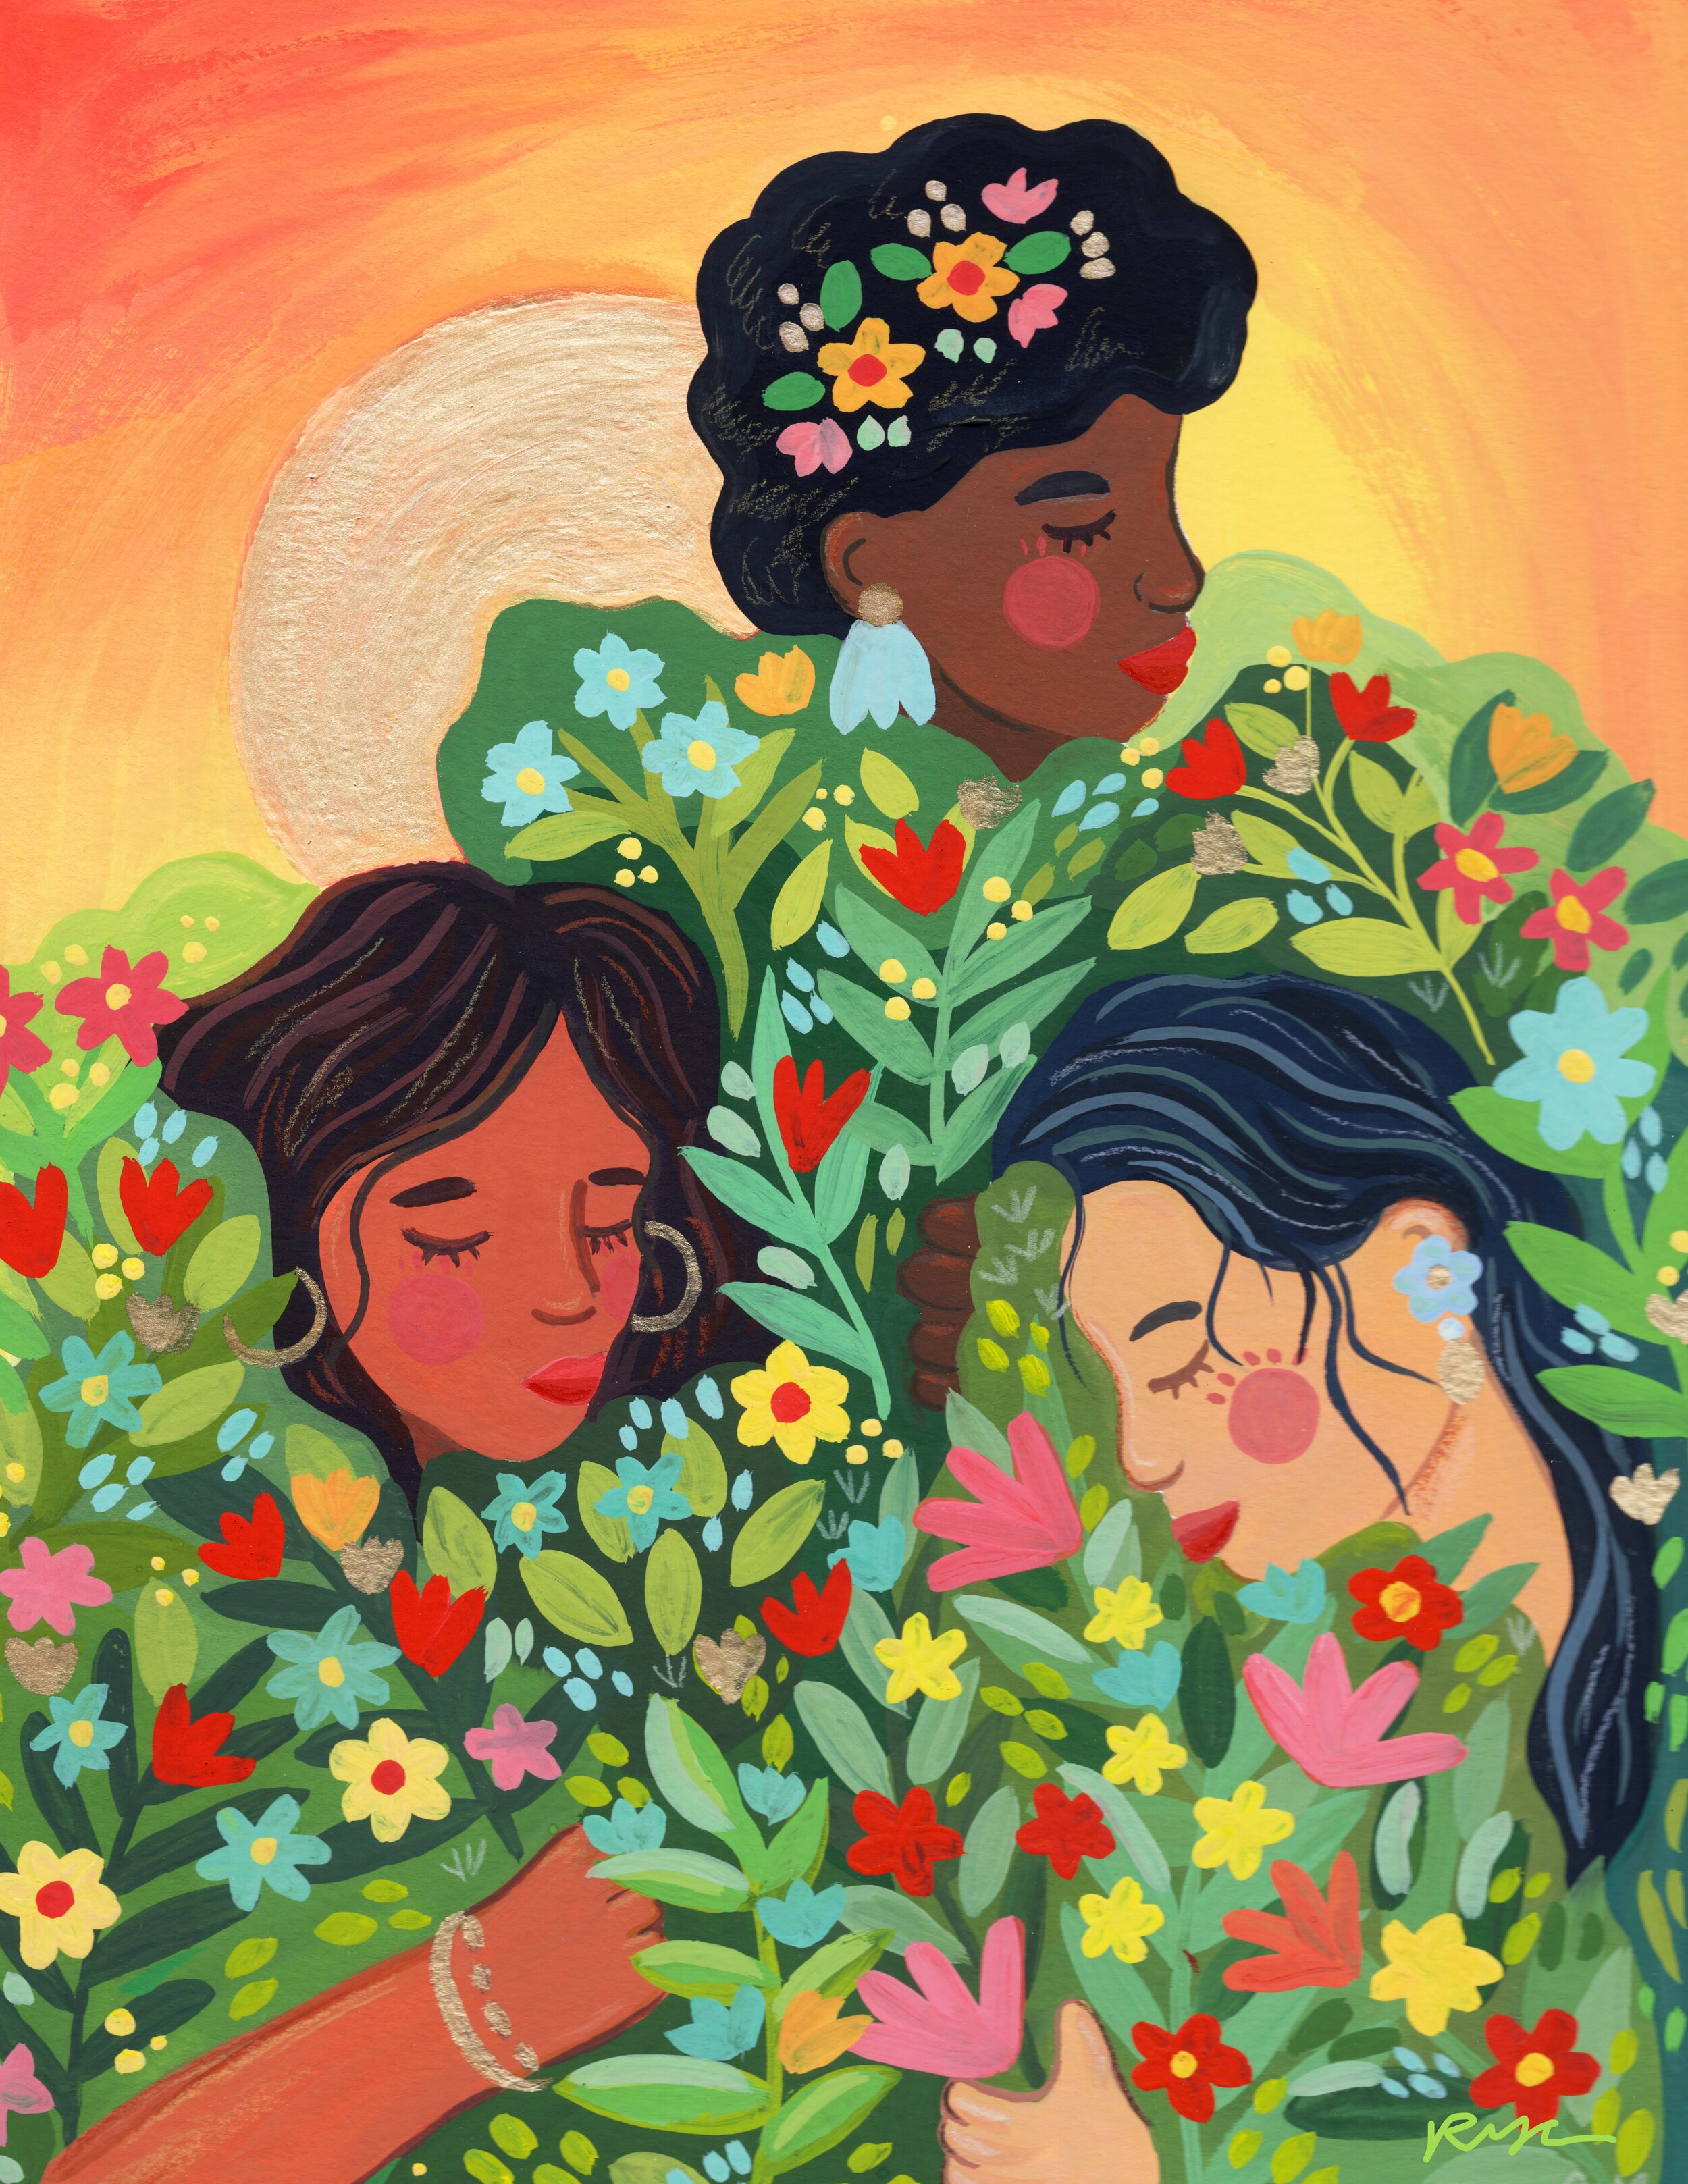 Blooming an Abundance of Hope